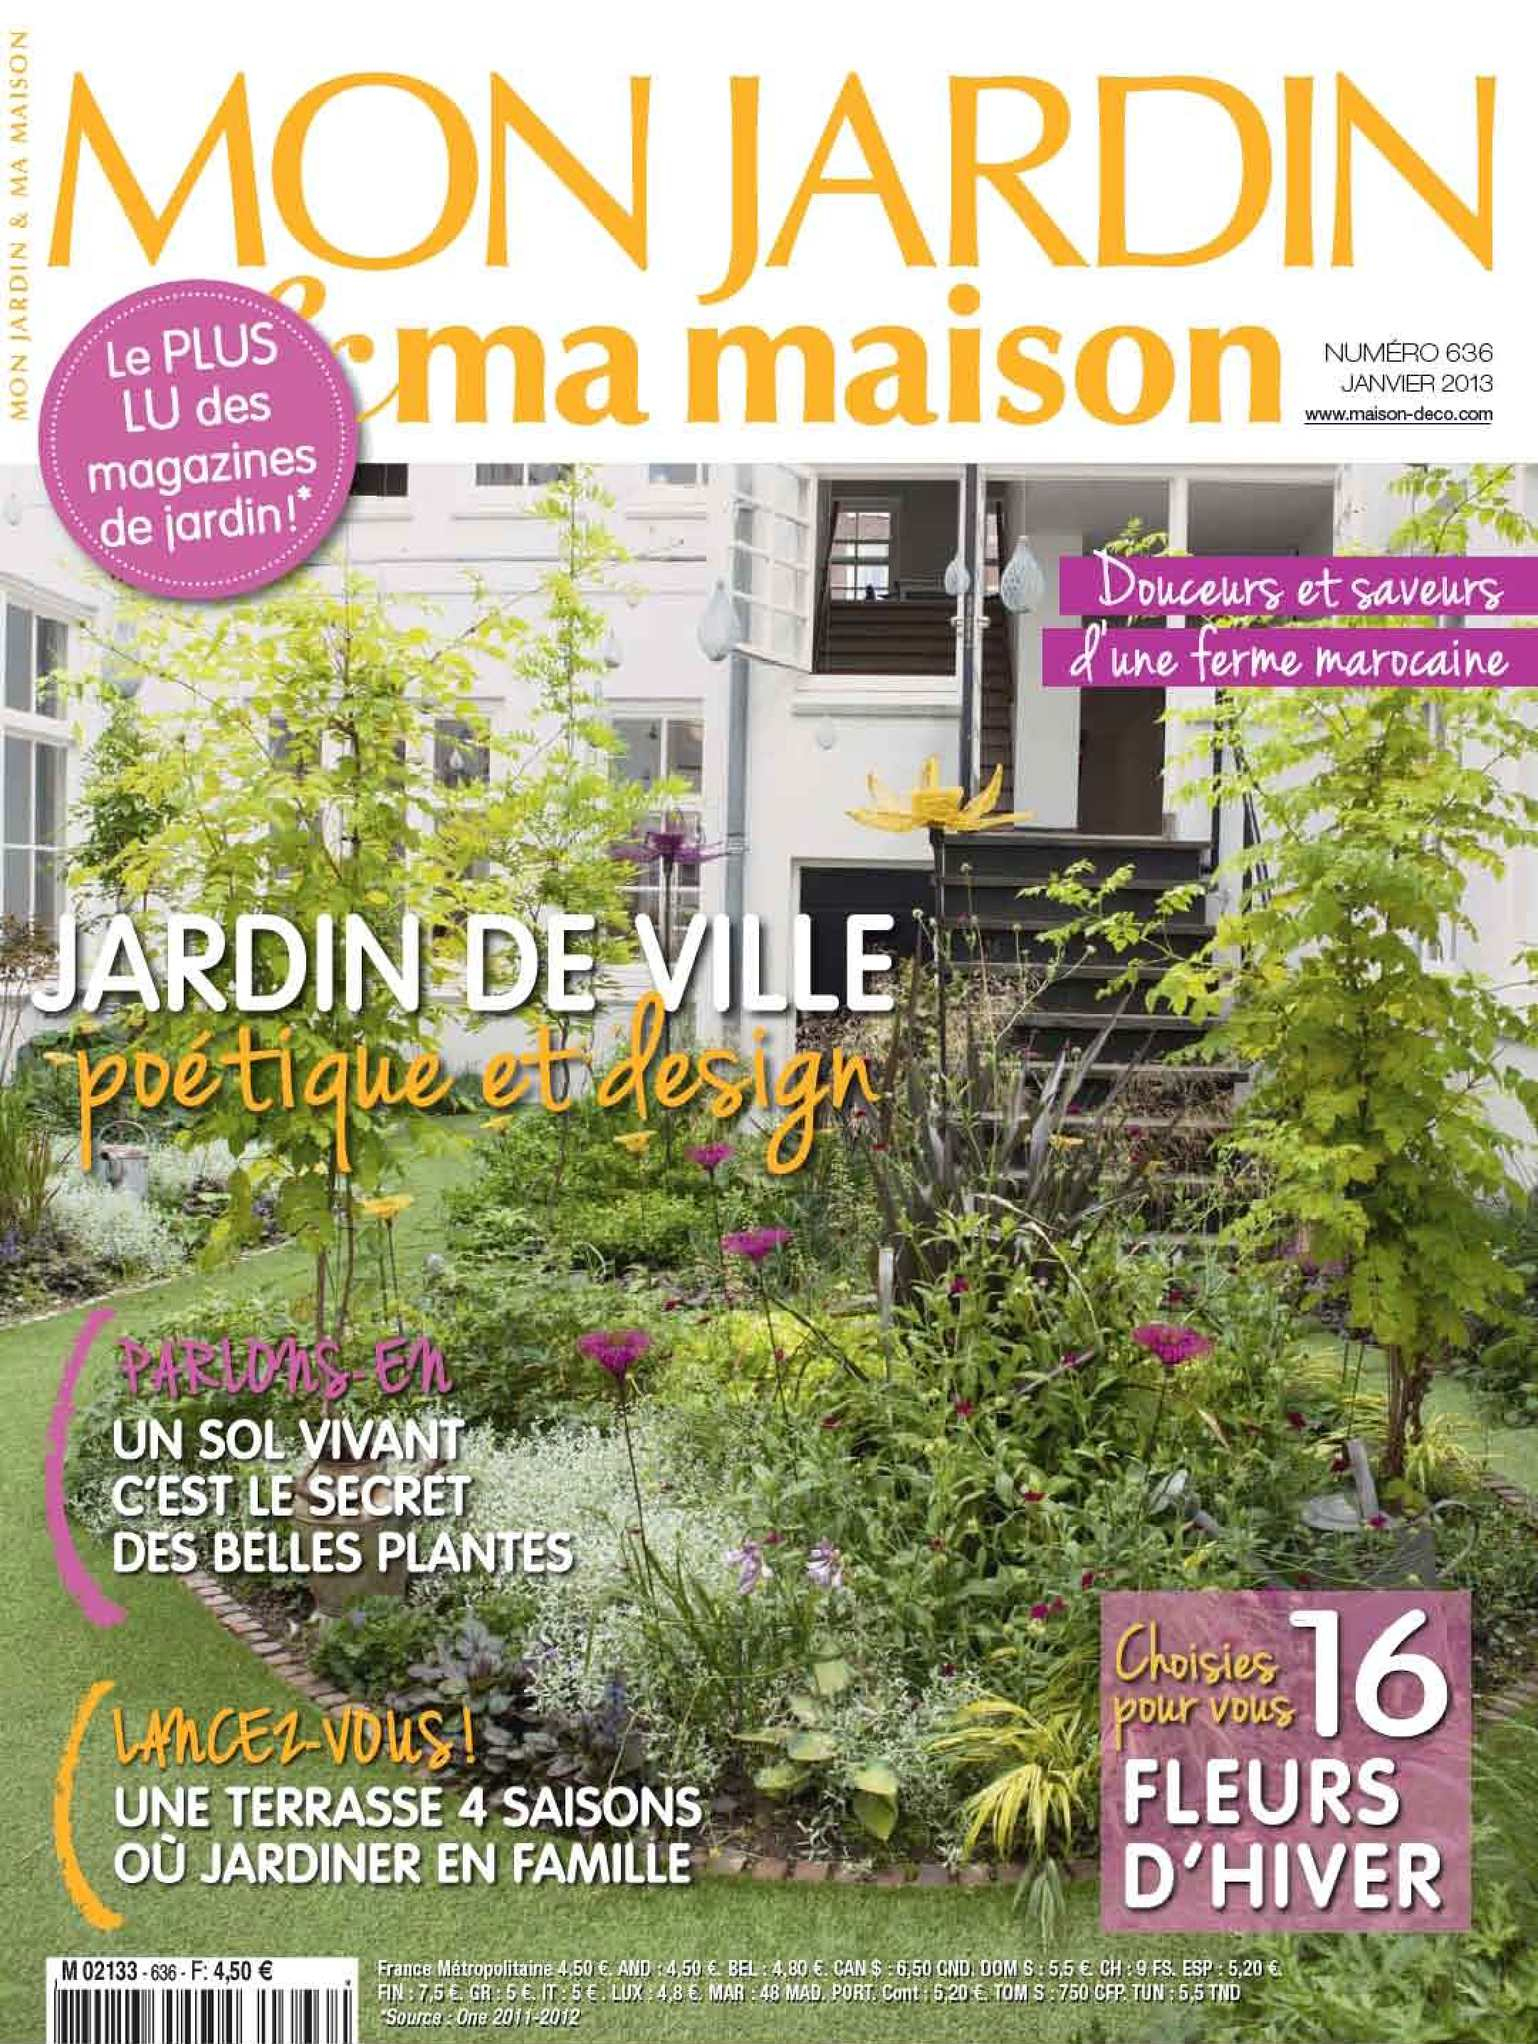 Calaméo - Jardin Droog Amsterdam Mon Jardin Ma Maison destiné Magazine Mon Jardin Et Ma Maison